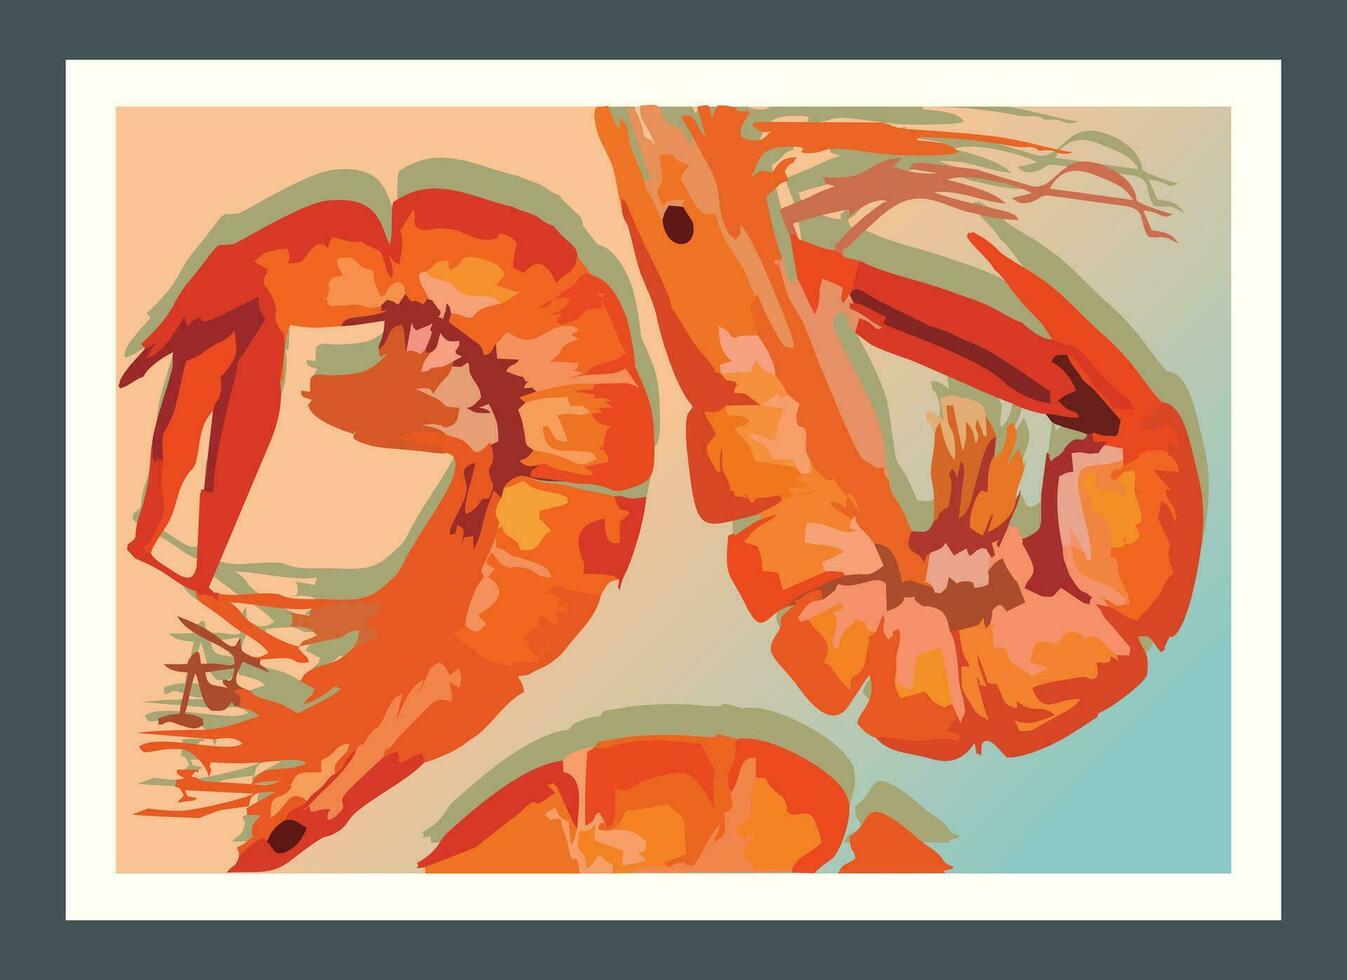 Shrimp painting designs, shrimp illustrations, dingding decorations. home decoration painting. vector